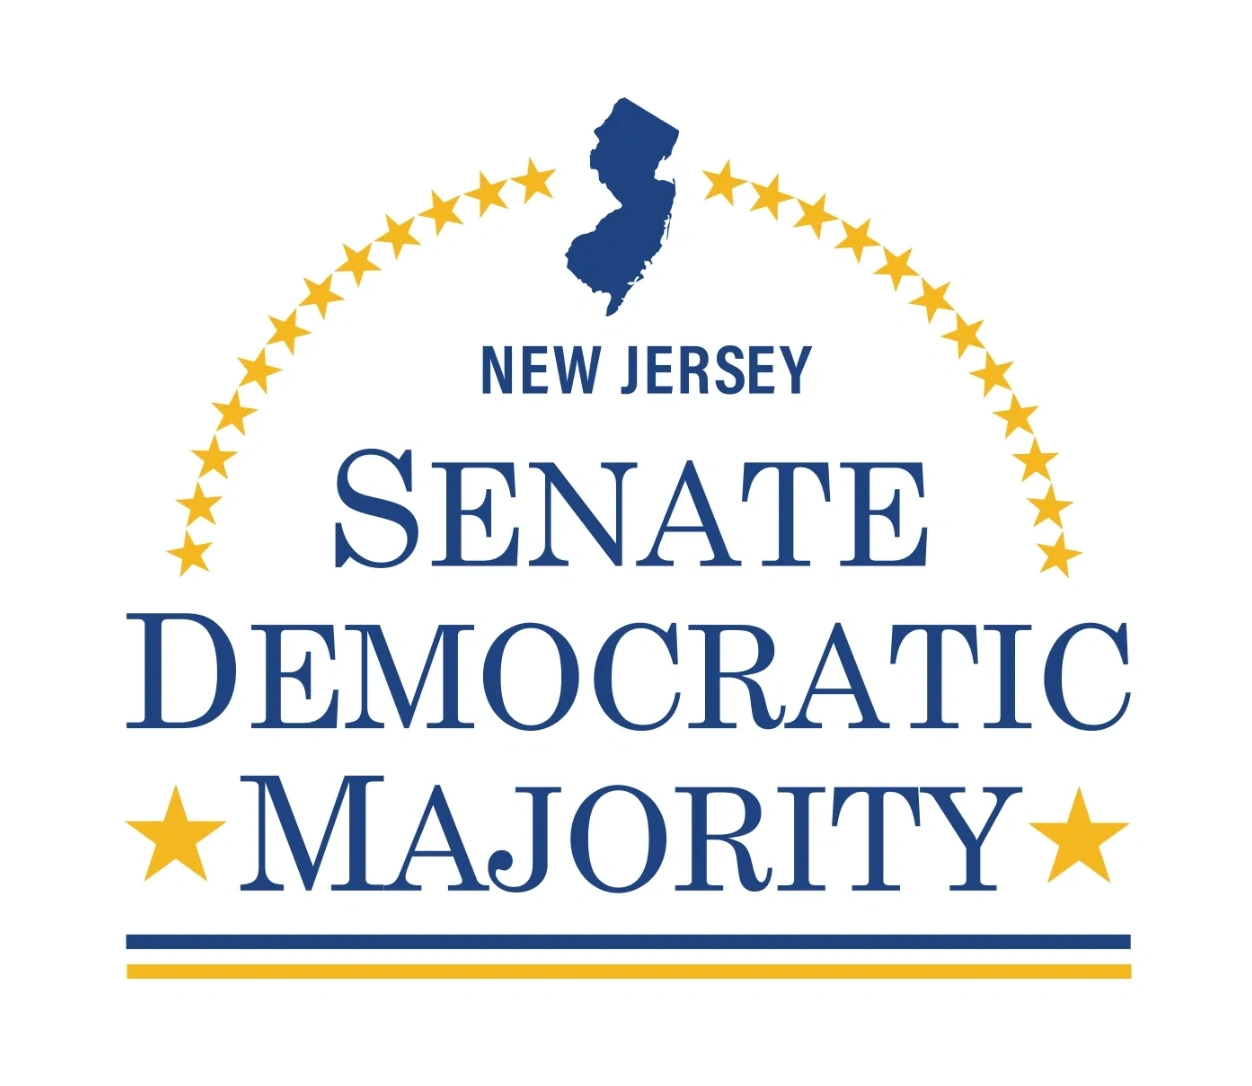 New Jersey Senate Democratic Majority